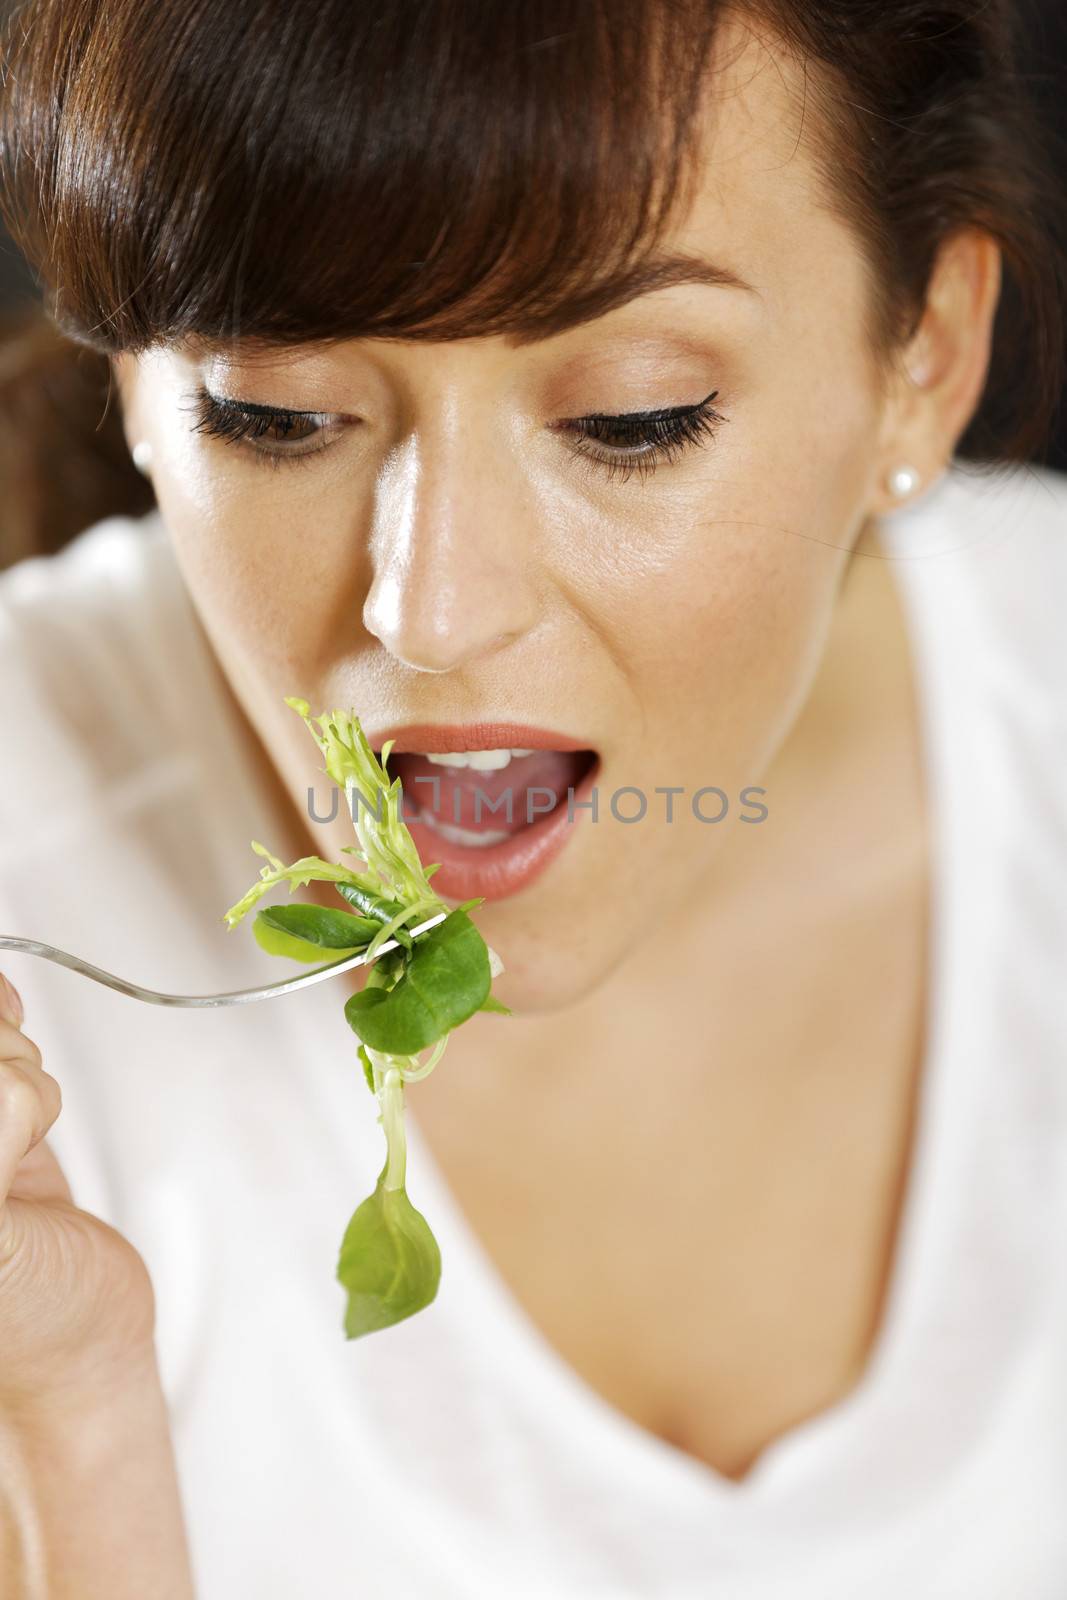 Woman eating salad at home by studiofi